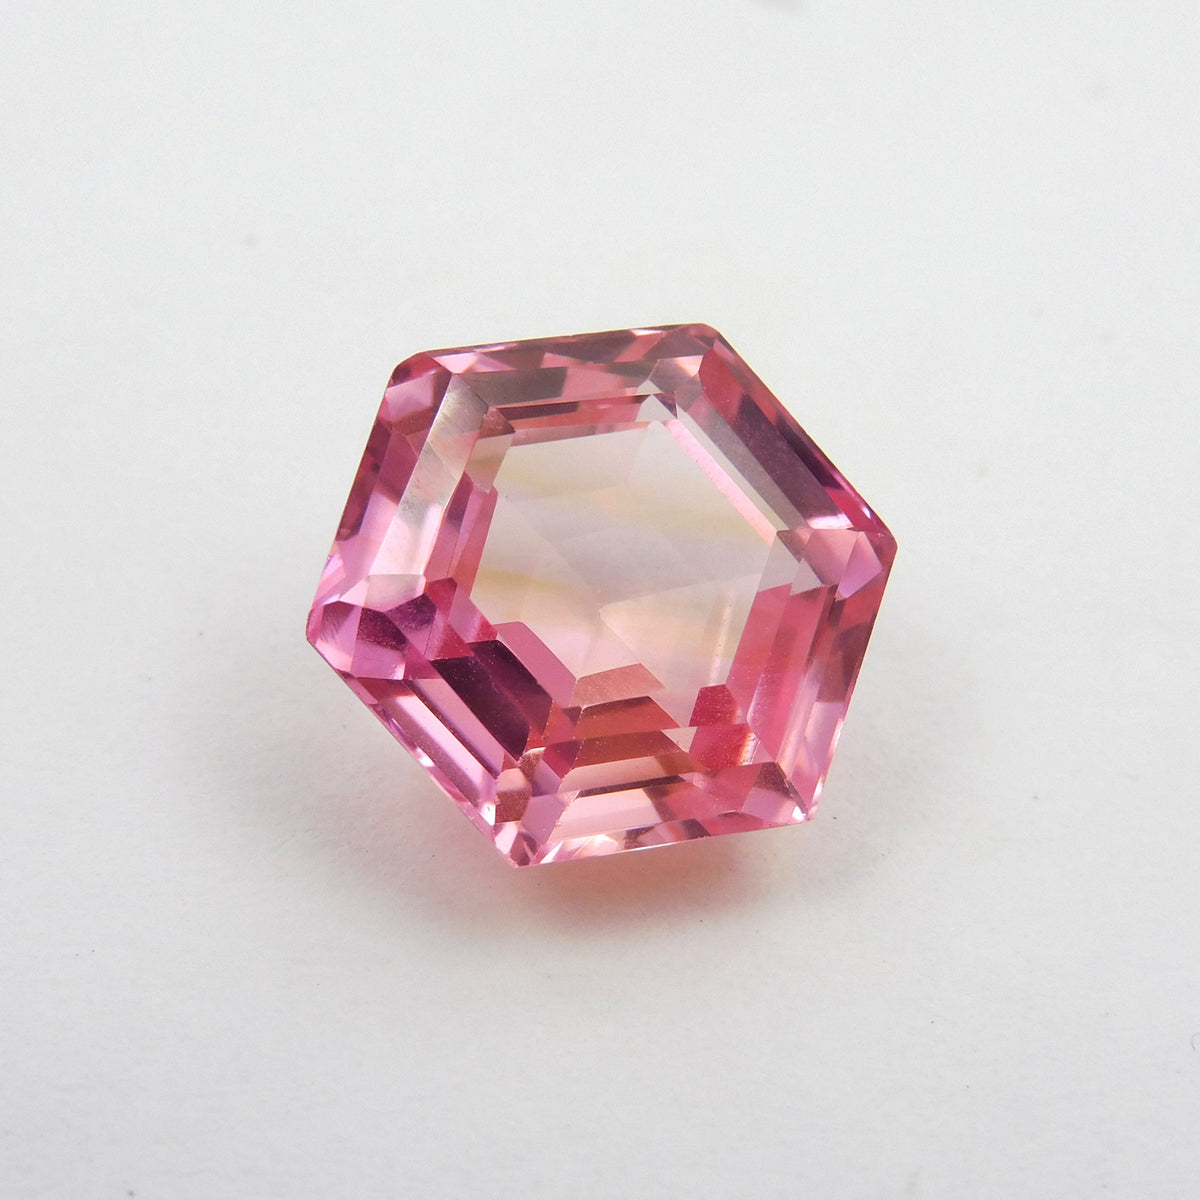 "Ring Size Sapphire Gemstone "Certified Natural 7.84 Carat Padparadscha Sapphire Fancy Shape Loose Gemstone | Sri Lanka's Sapphire | Best Price